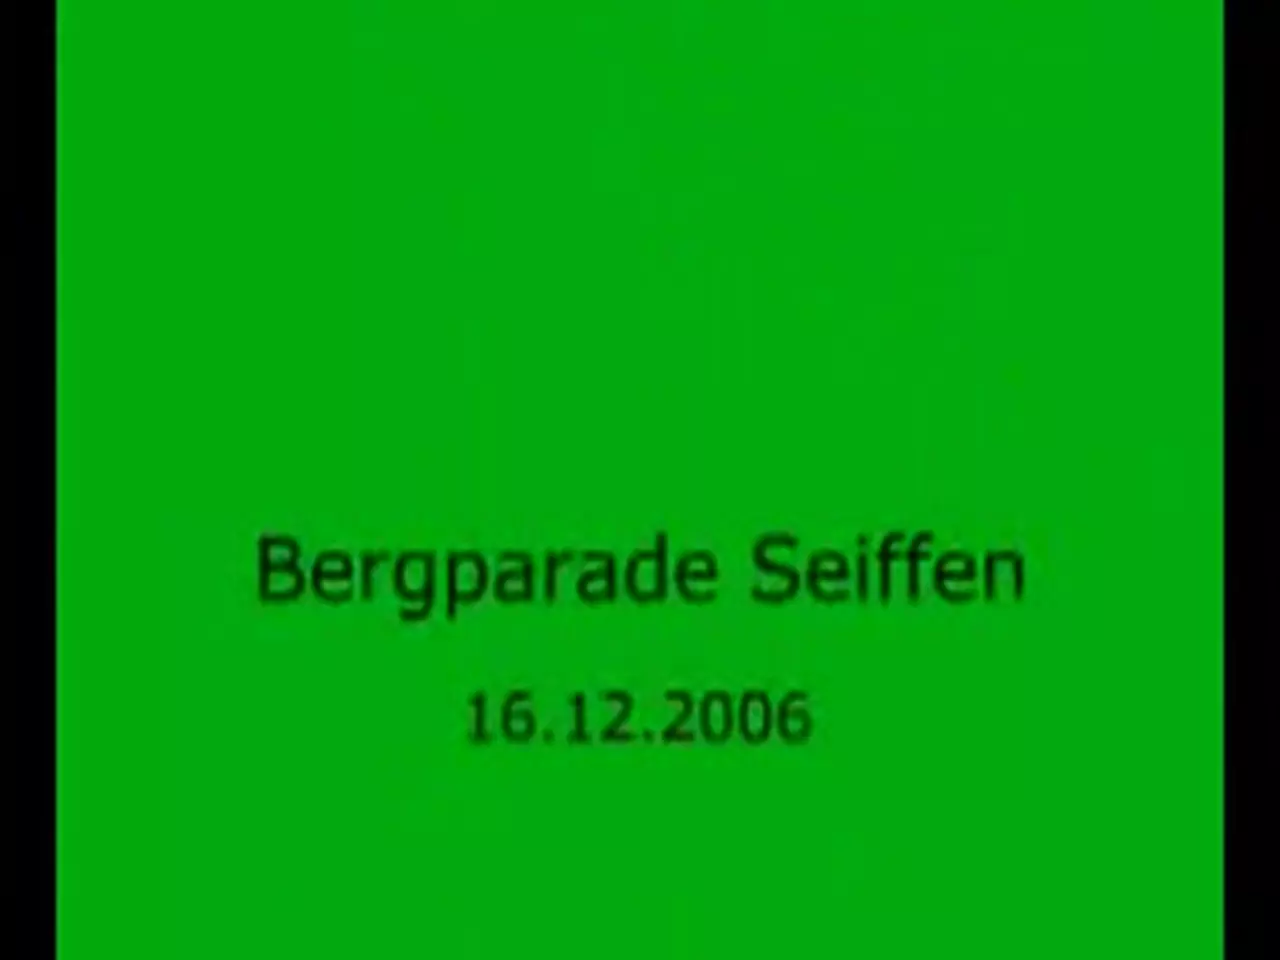 Foto: Bergparade in Seiffen am 16.12.2006